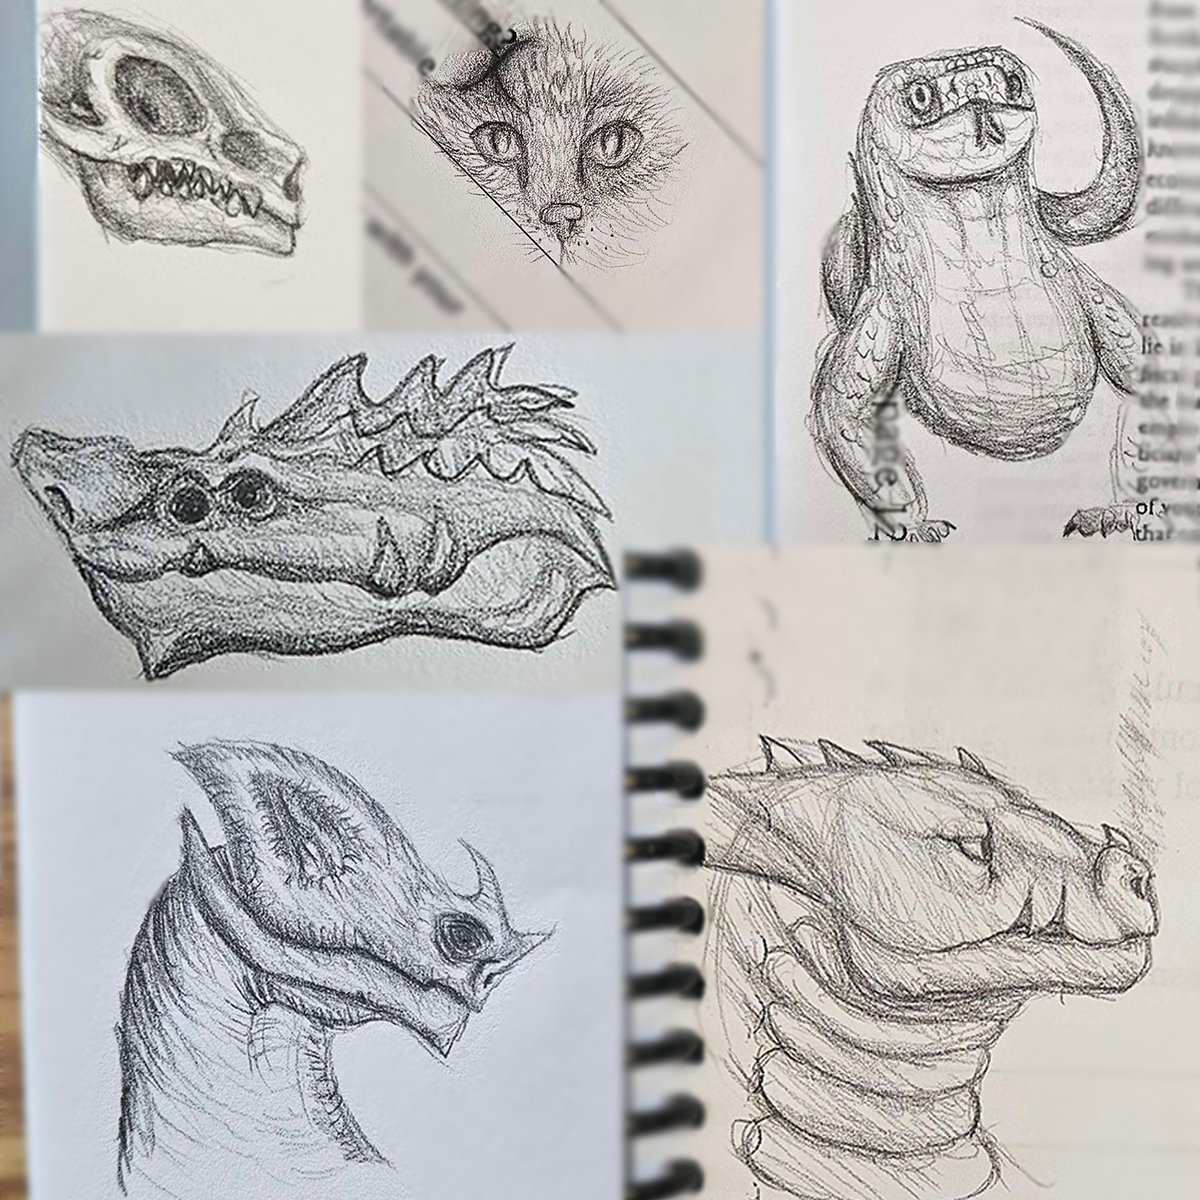 Some mini sketches I did in my notes.

#mechanicalpencil
#pencildrawing
#pencilsketch
#sketch
#sketchart
#sketchbook
#sketchdoodle
#sketchdrawing
#sketchdump
#arttraditional
#creature
#creaturedesign
#creatures
#dragon
#dragonart
#lizard
#creaturemonster